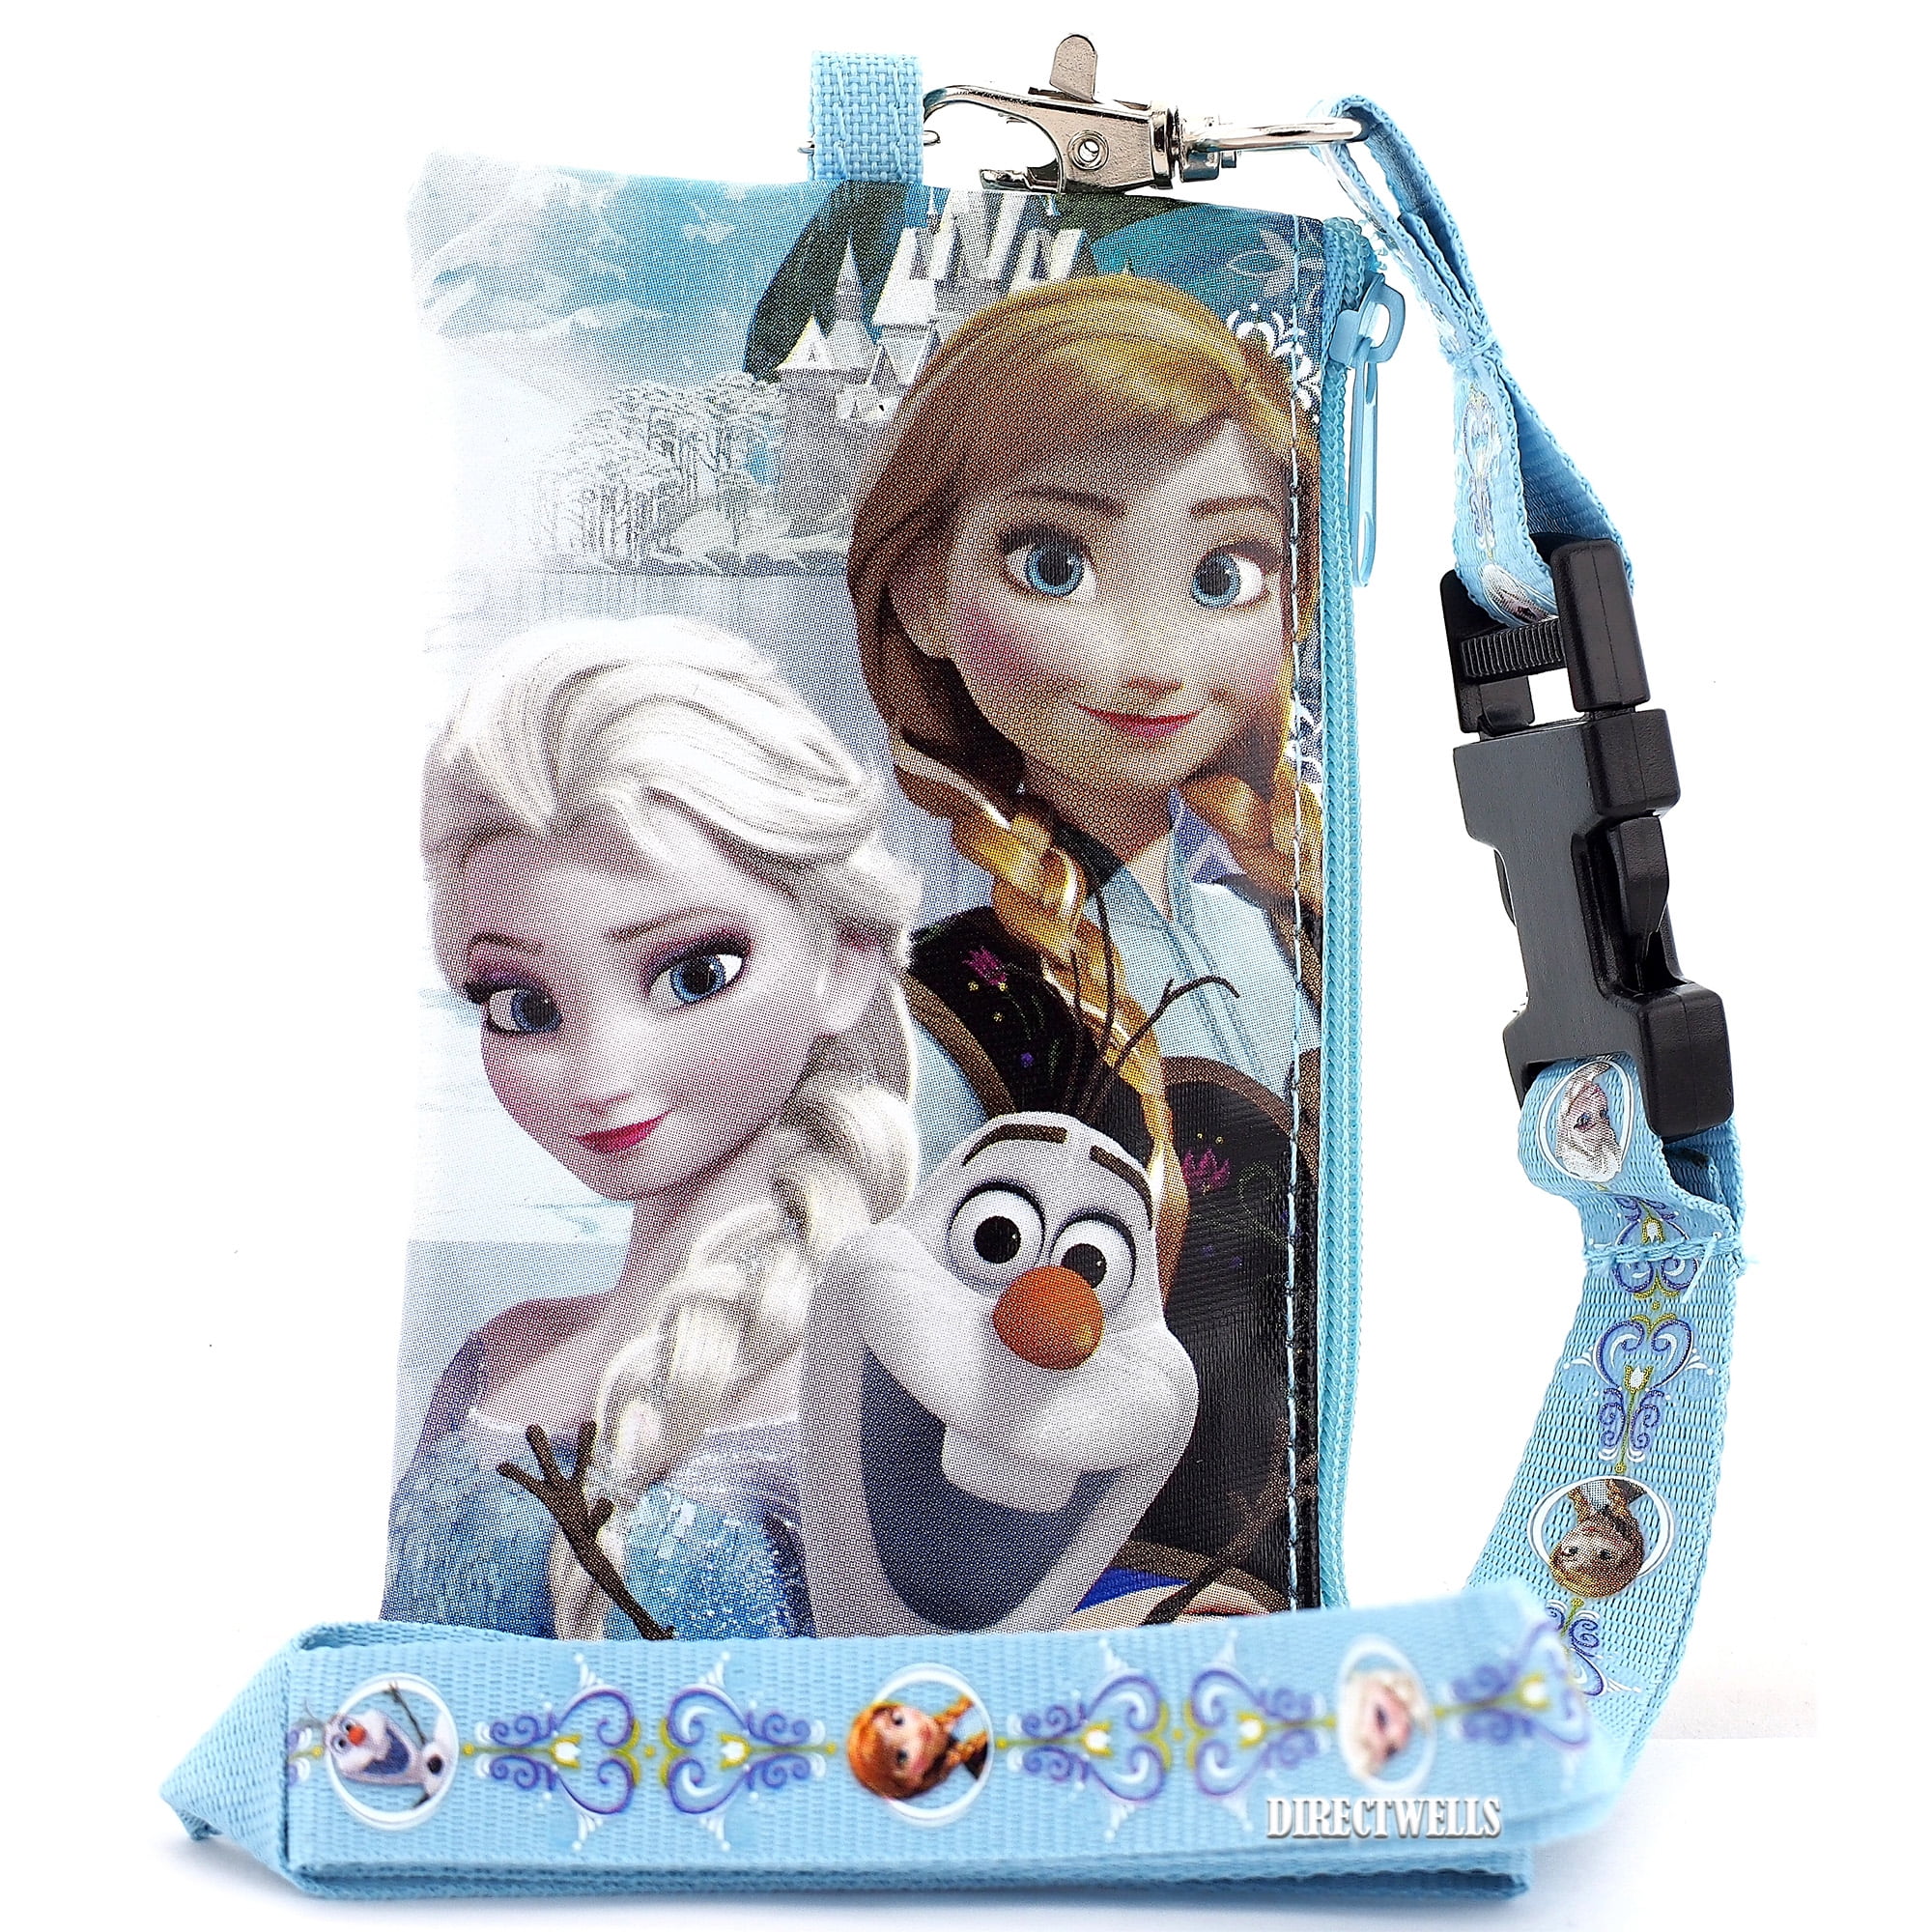 Disney Frozen Anna Elsa and Olaf Snow Blue Lanyard with Detachable Coin Purse cbd6465c 59bc 441a a2a8 d5ad6dd8747c 1.fdf25cbbc87fcbeffa517d98e099745d